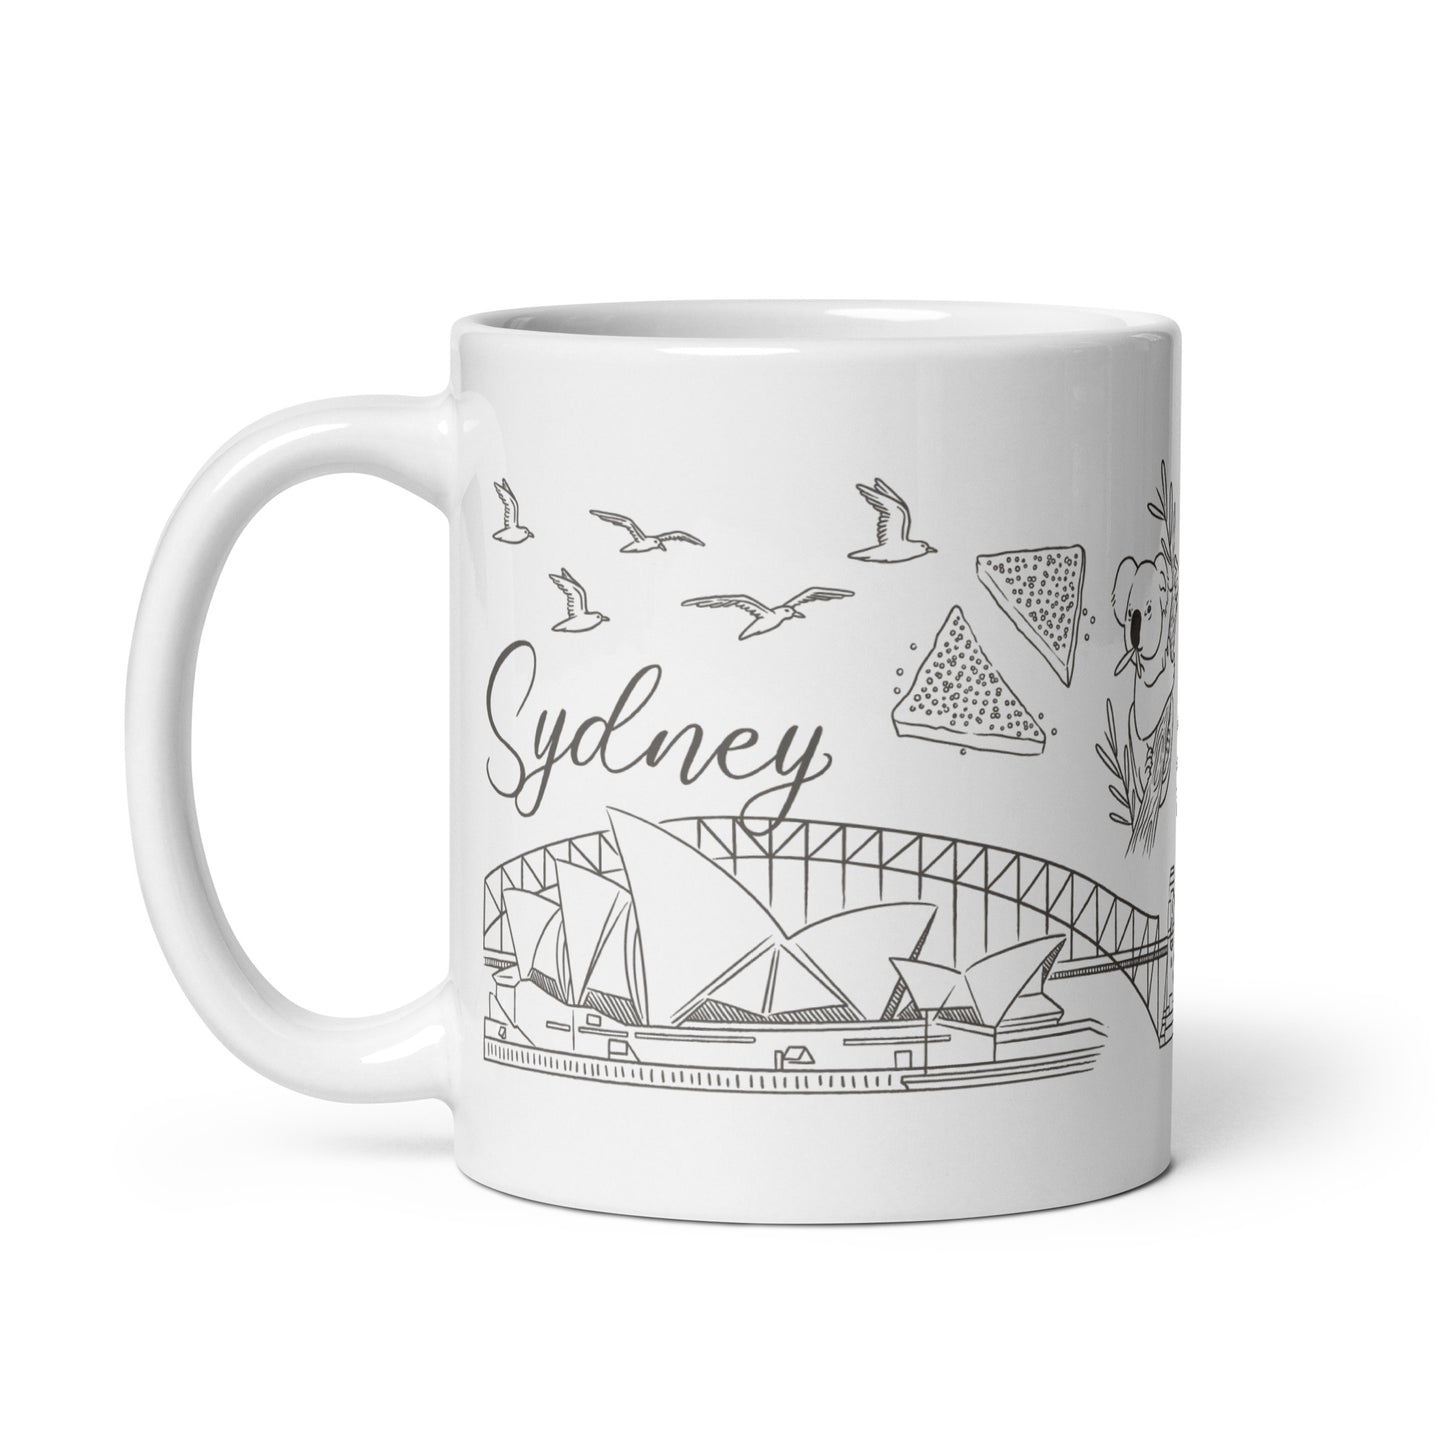 Sydney Icons Mug